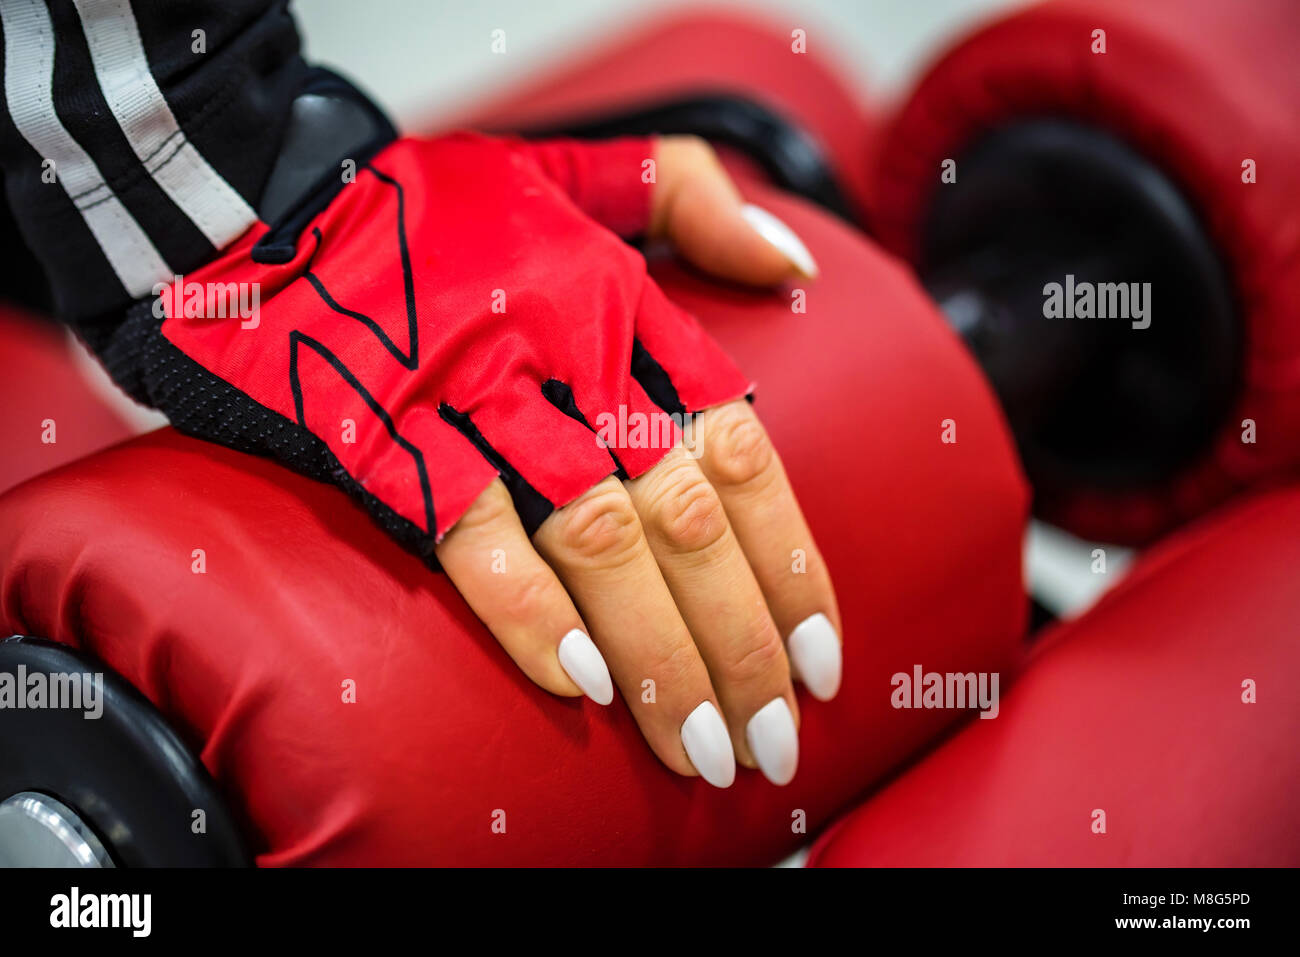 Woman's hand touches gym machine Stock Photo